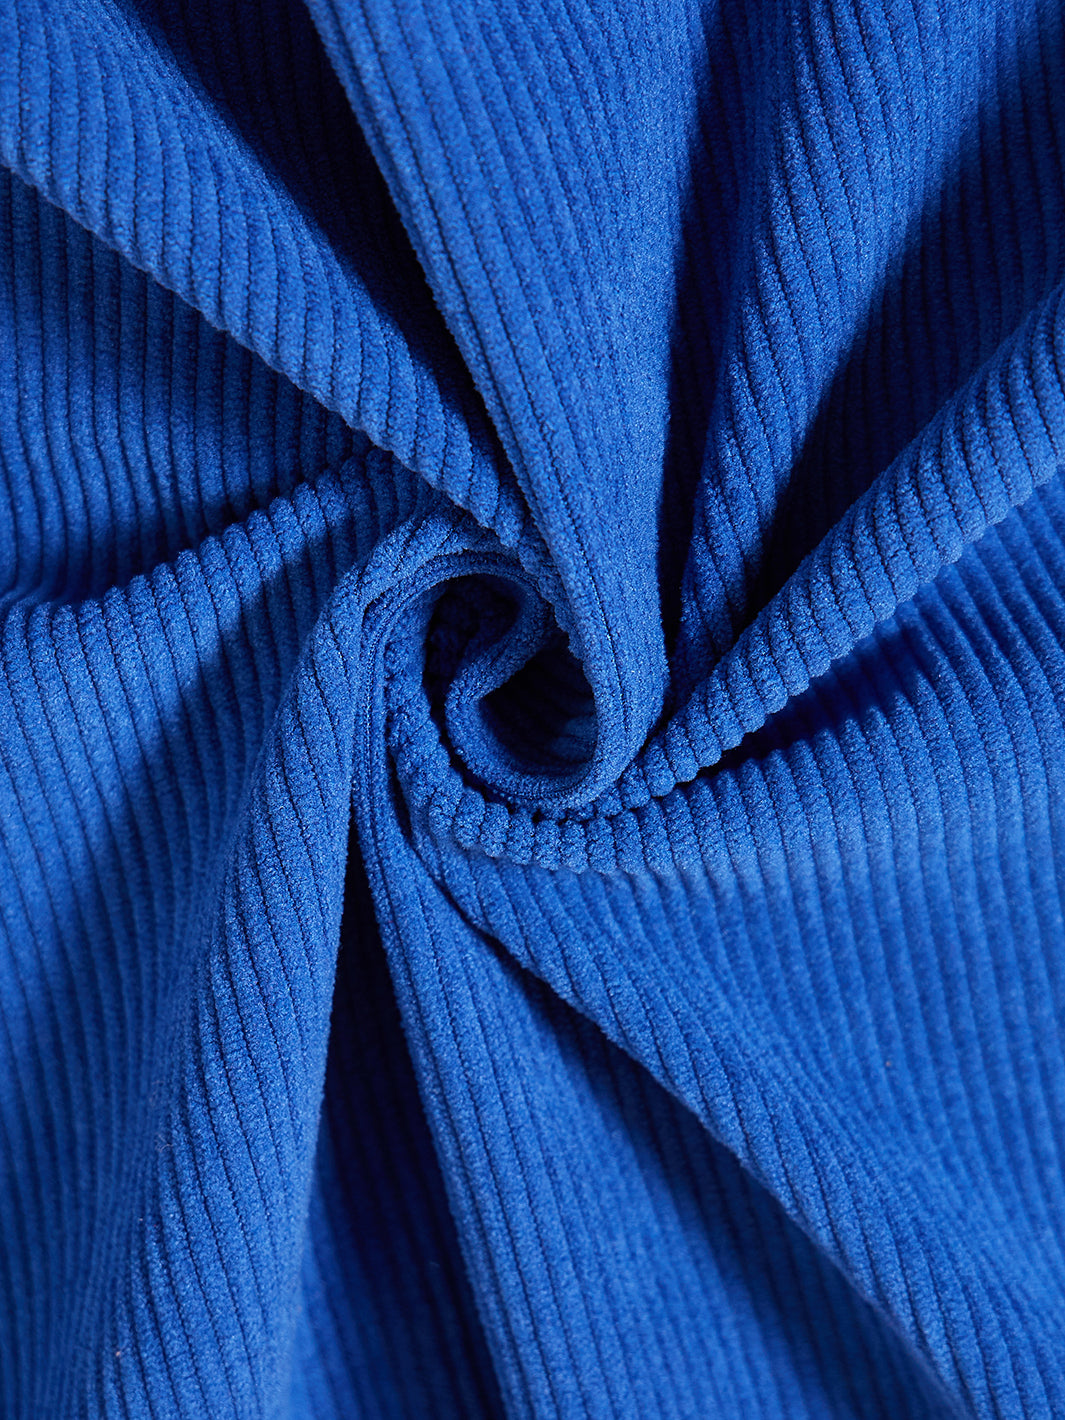 Trim Collar Dress - Royal Blue